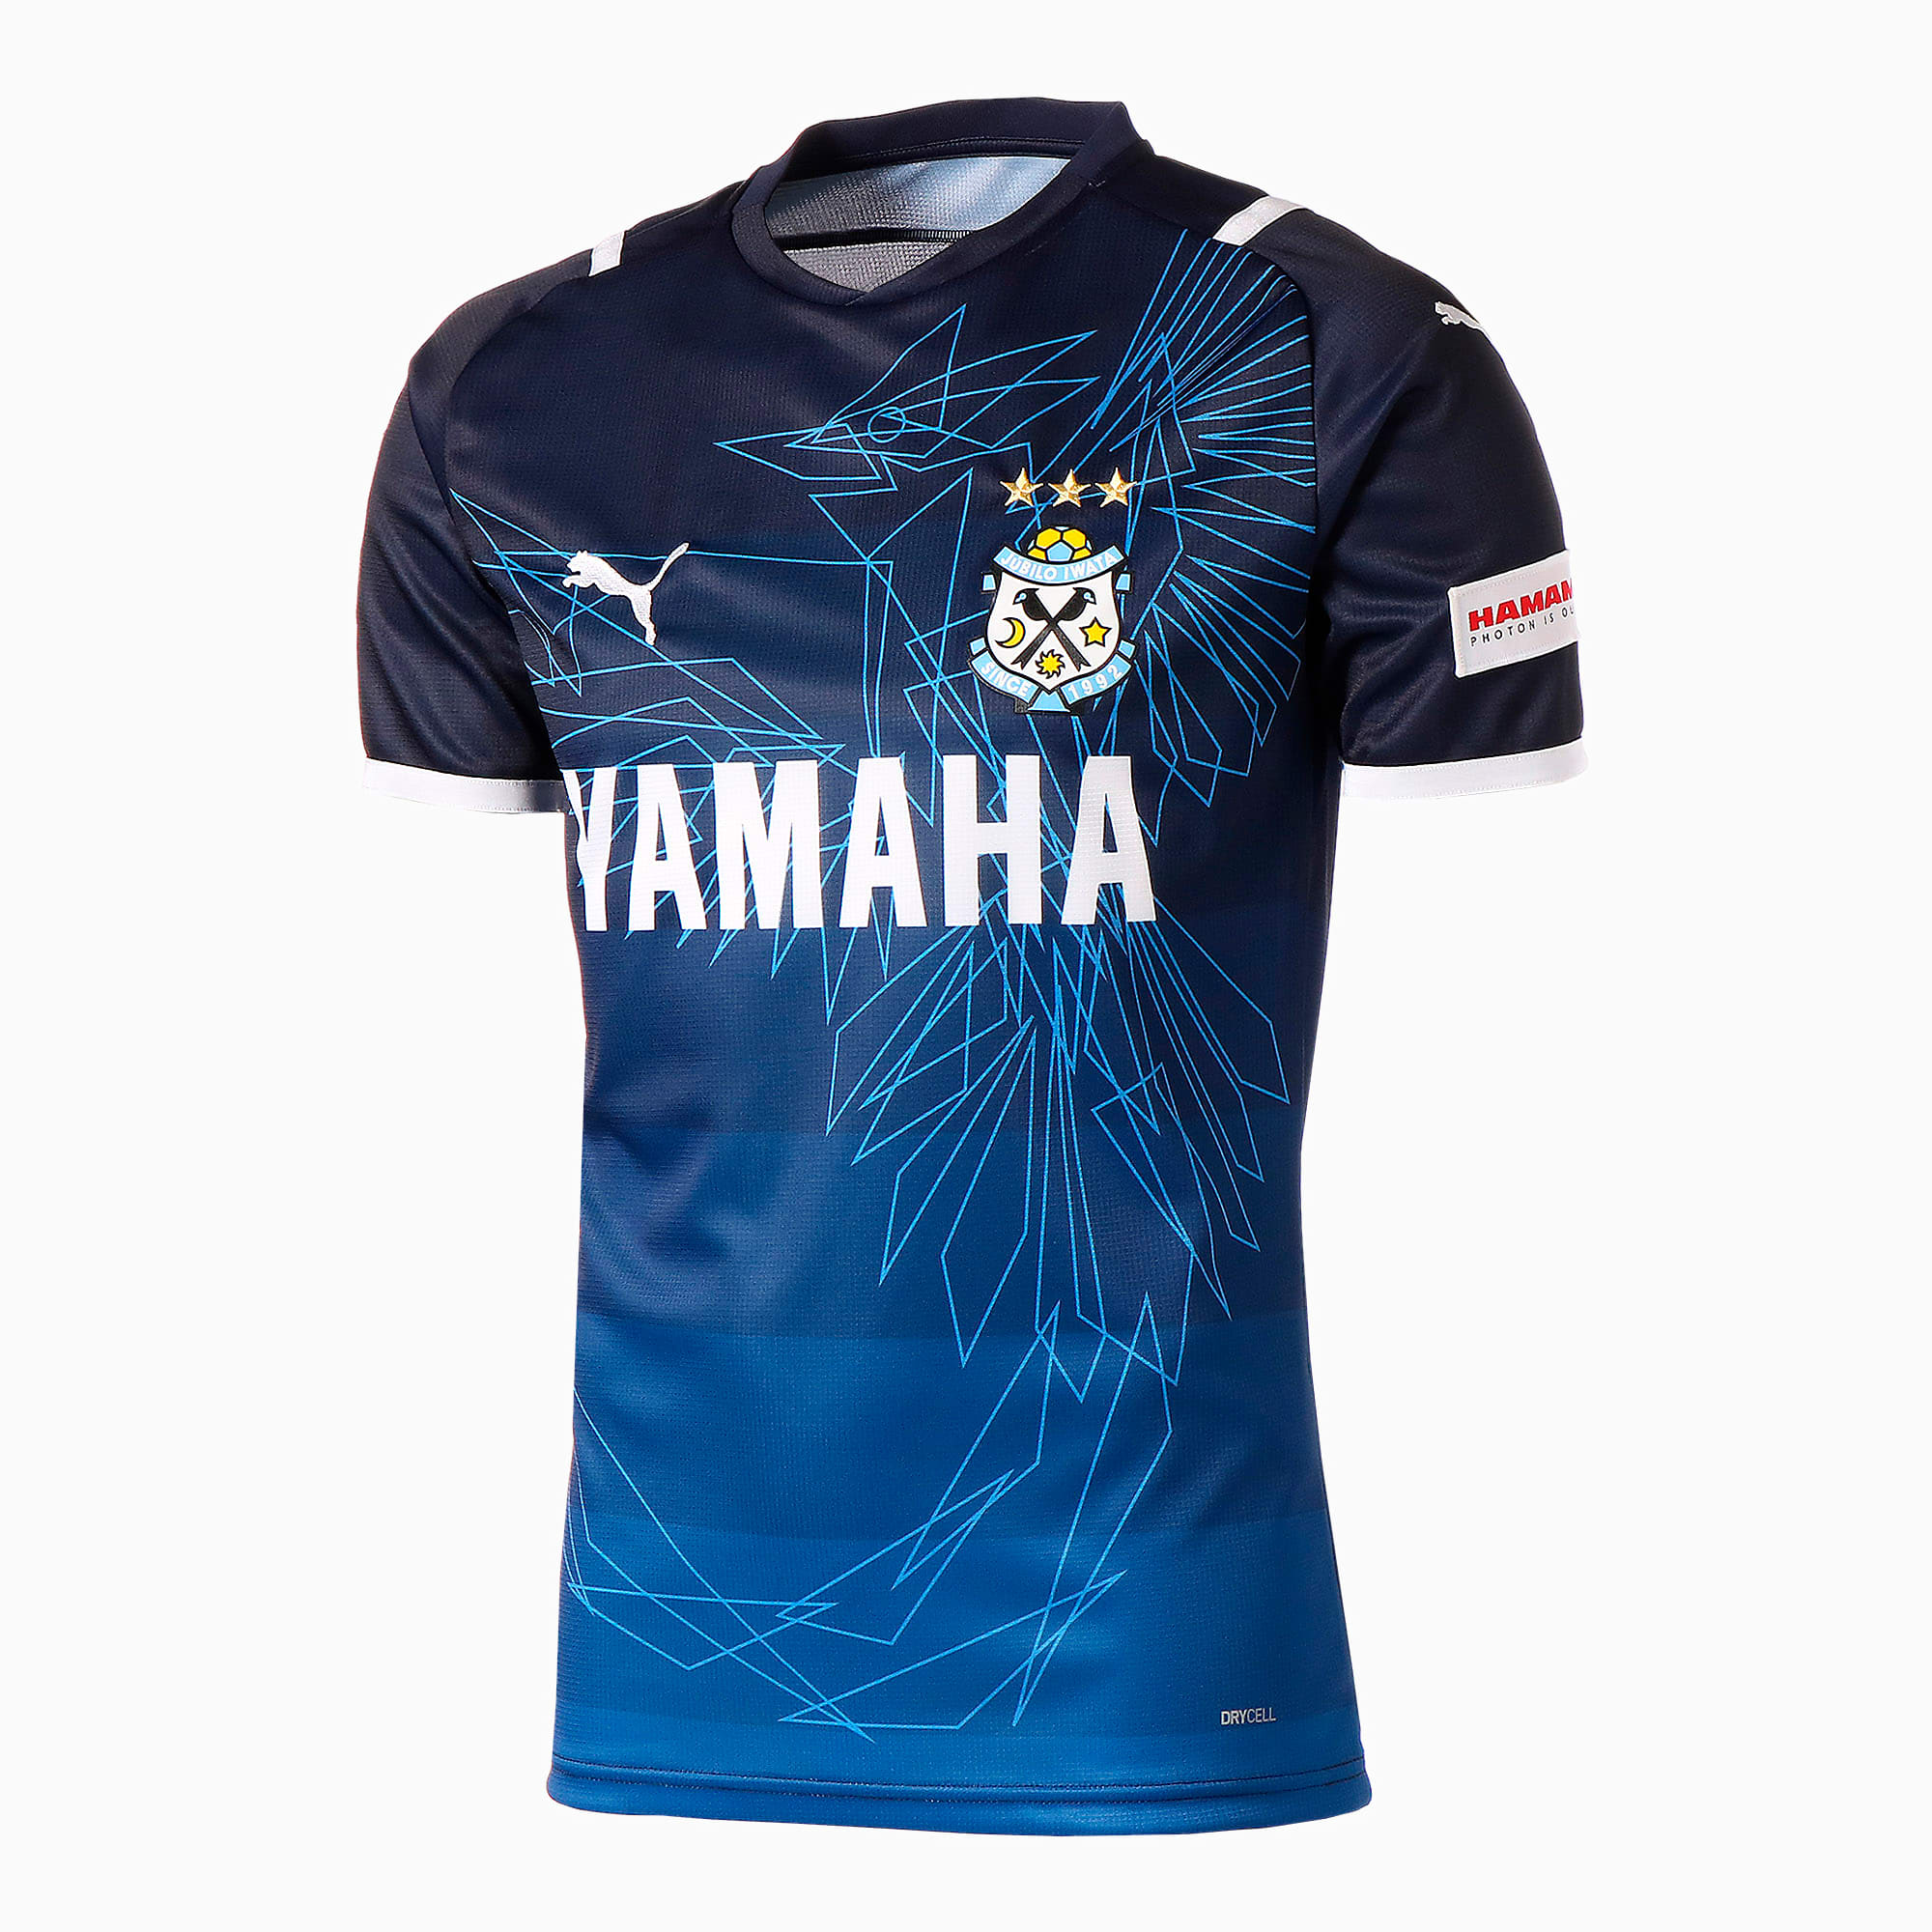 Puma公式 ジュビロ磐田 21 Gk ゴールキーパー 半袖 ゲームシャツ ユニフォーム サッカー メンズ